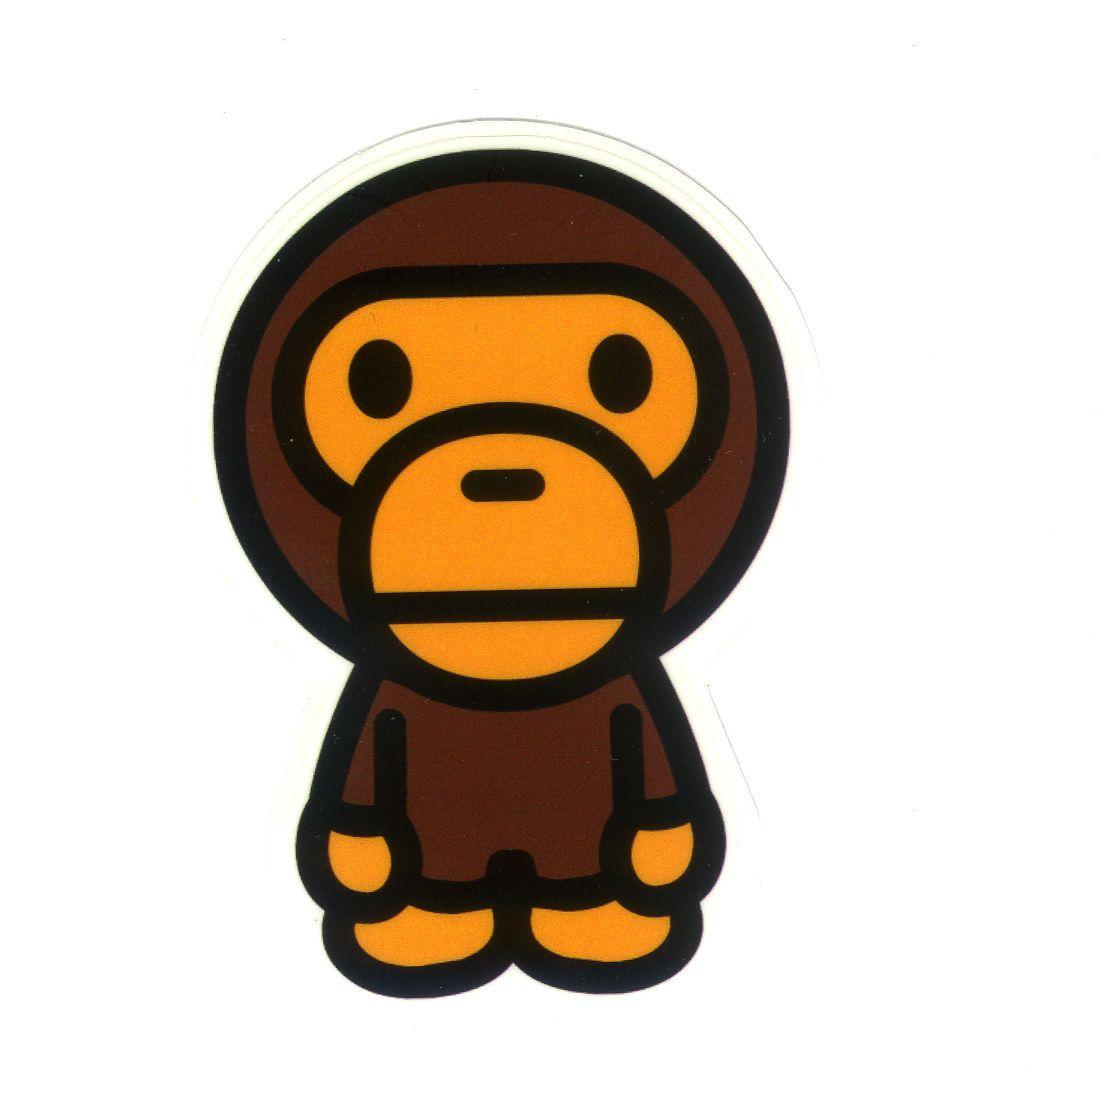 Baby Monkey Bathing Ape Logo - $3.69 Bathing Ape Bape Baby Milo Bape 3X2 Decal Sticker 1239